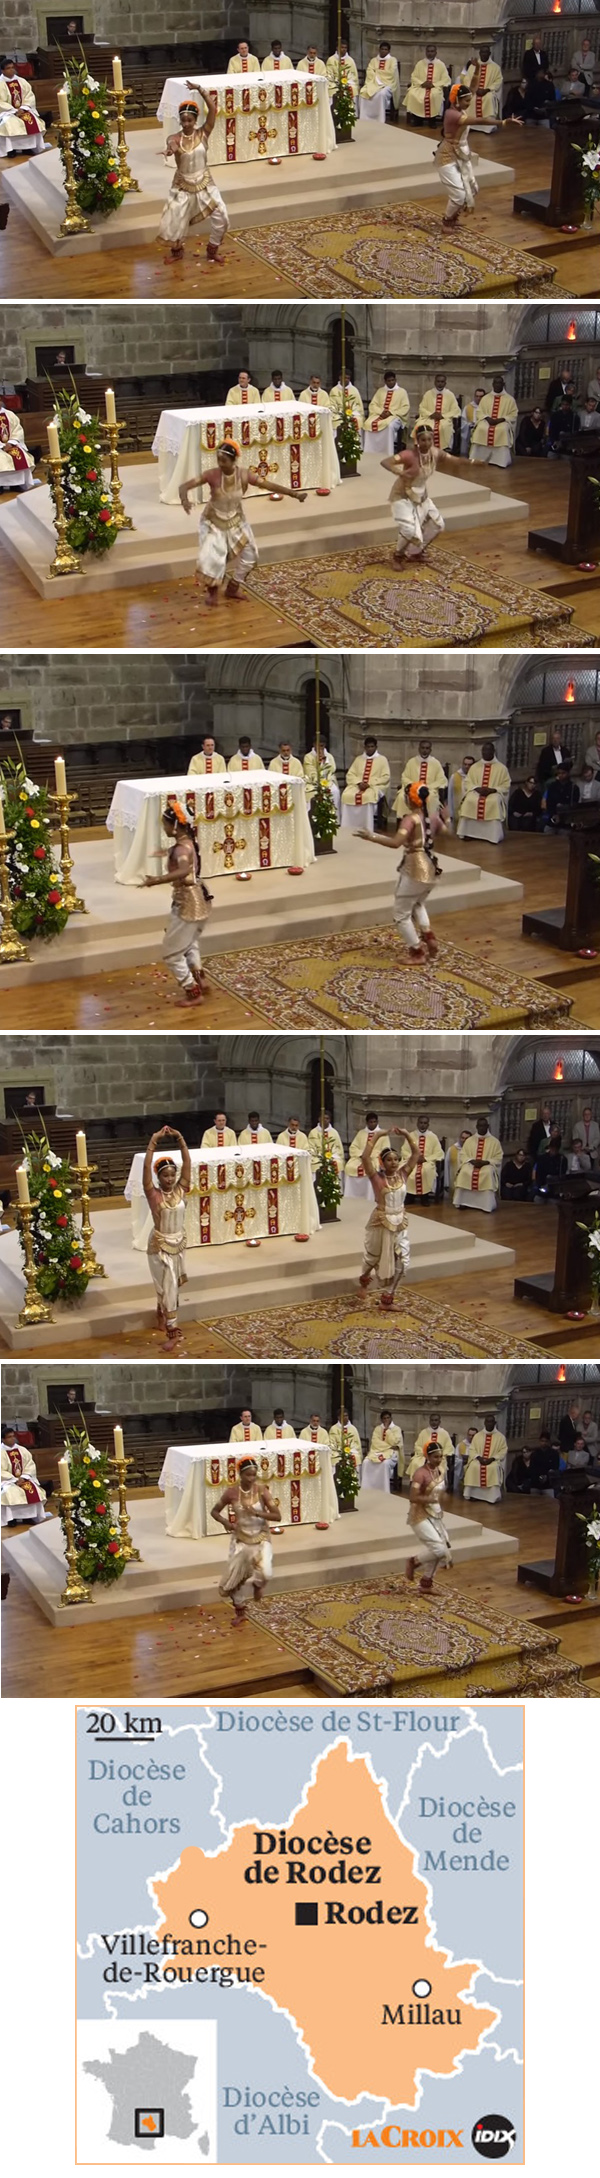 Hindu dances at Rodez Cathedral